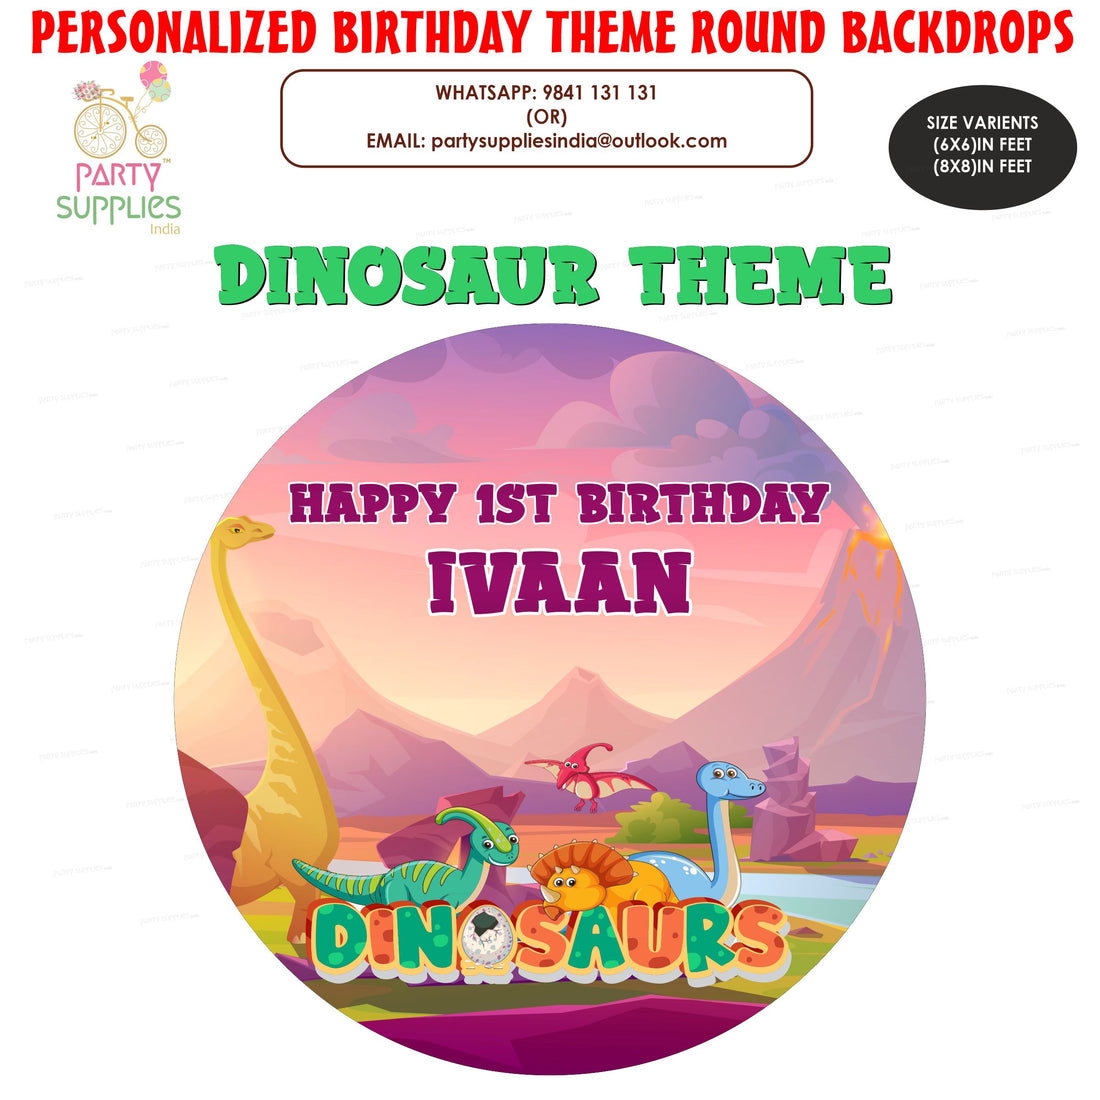 PSI Dinosaur Theme Classic Round Backdrop